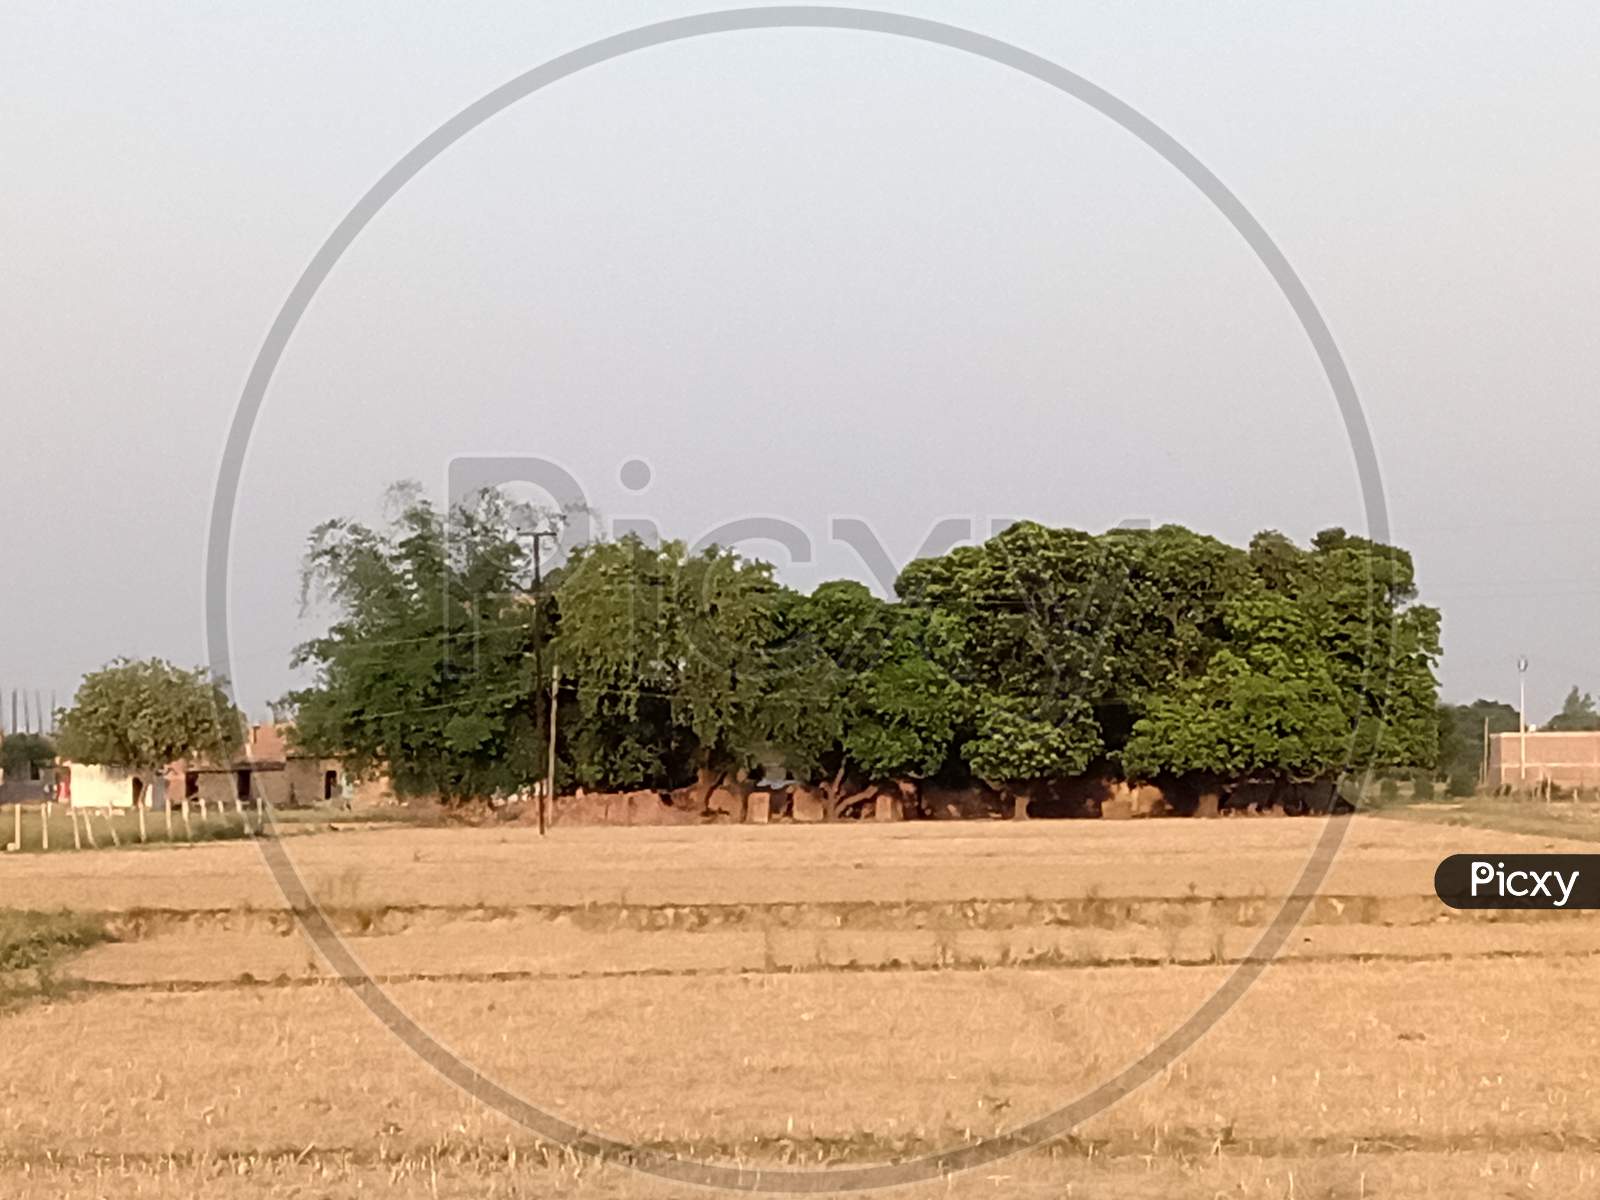 Tree of mango, House, field